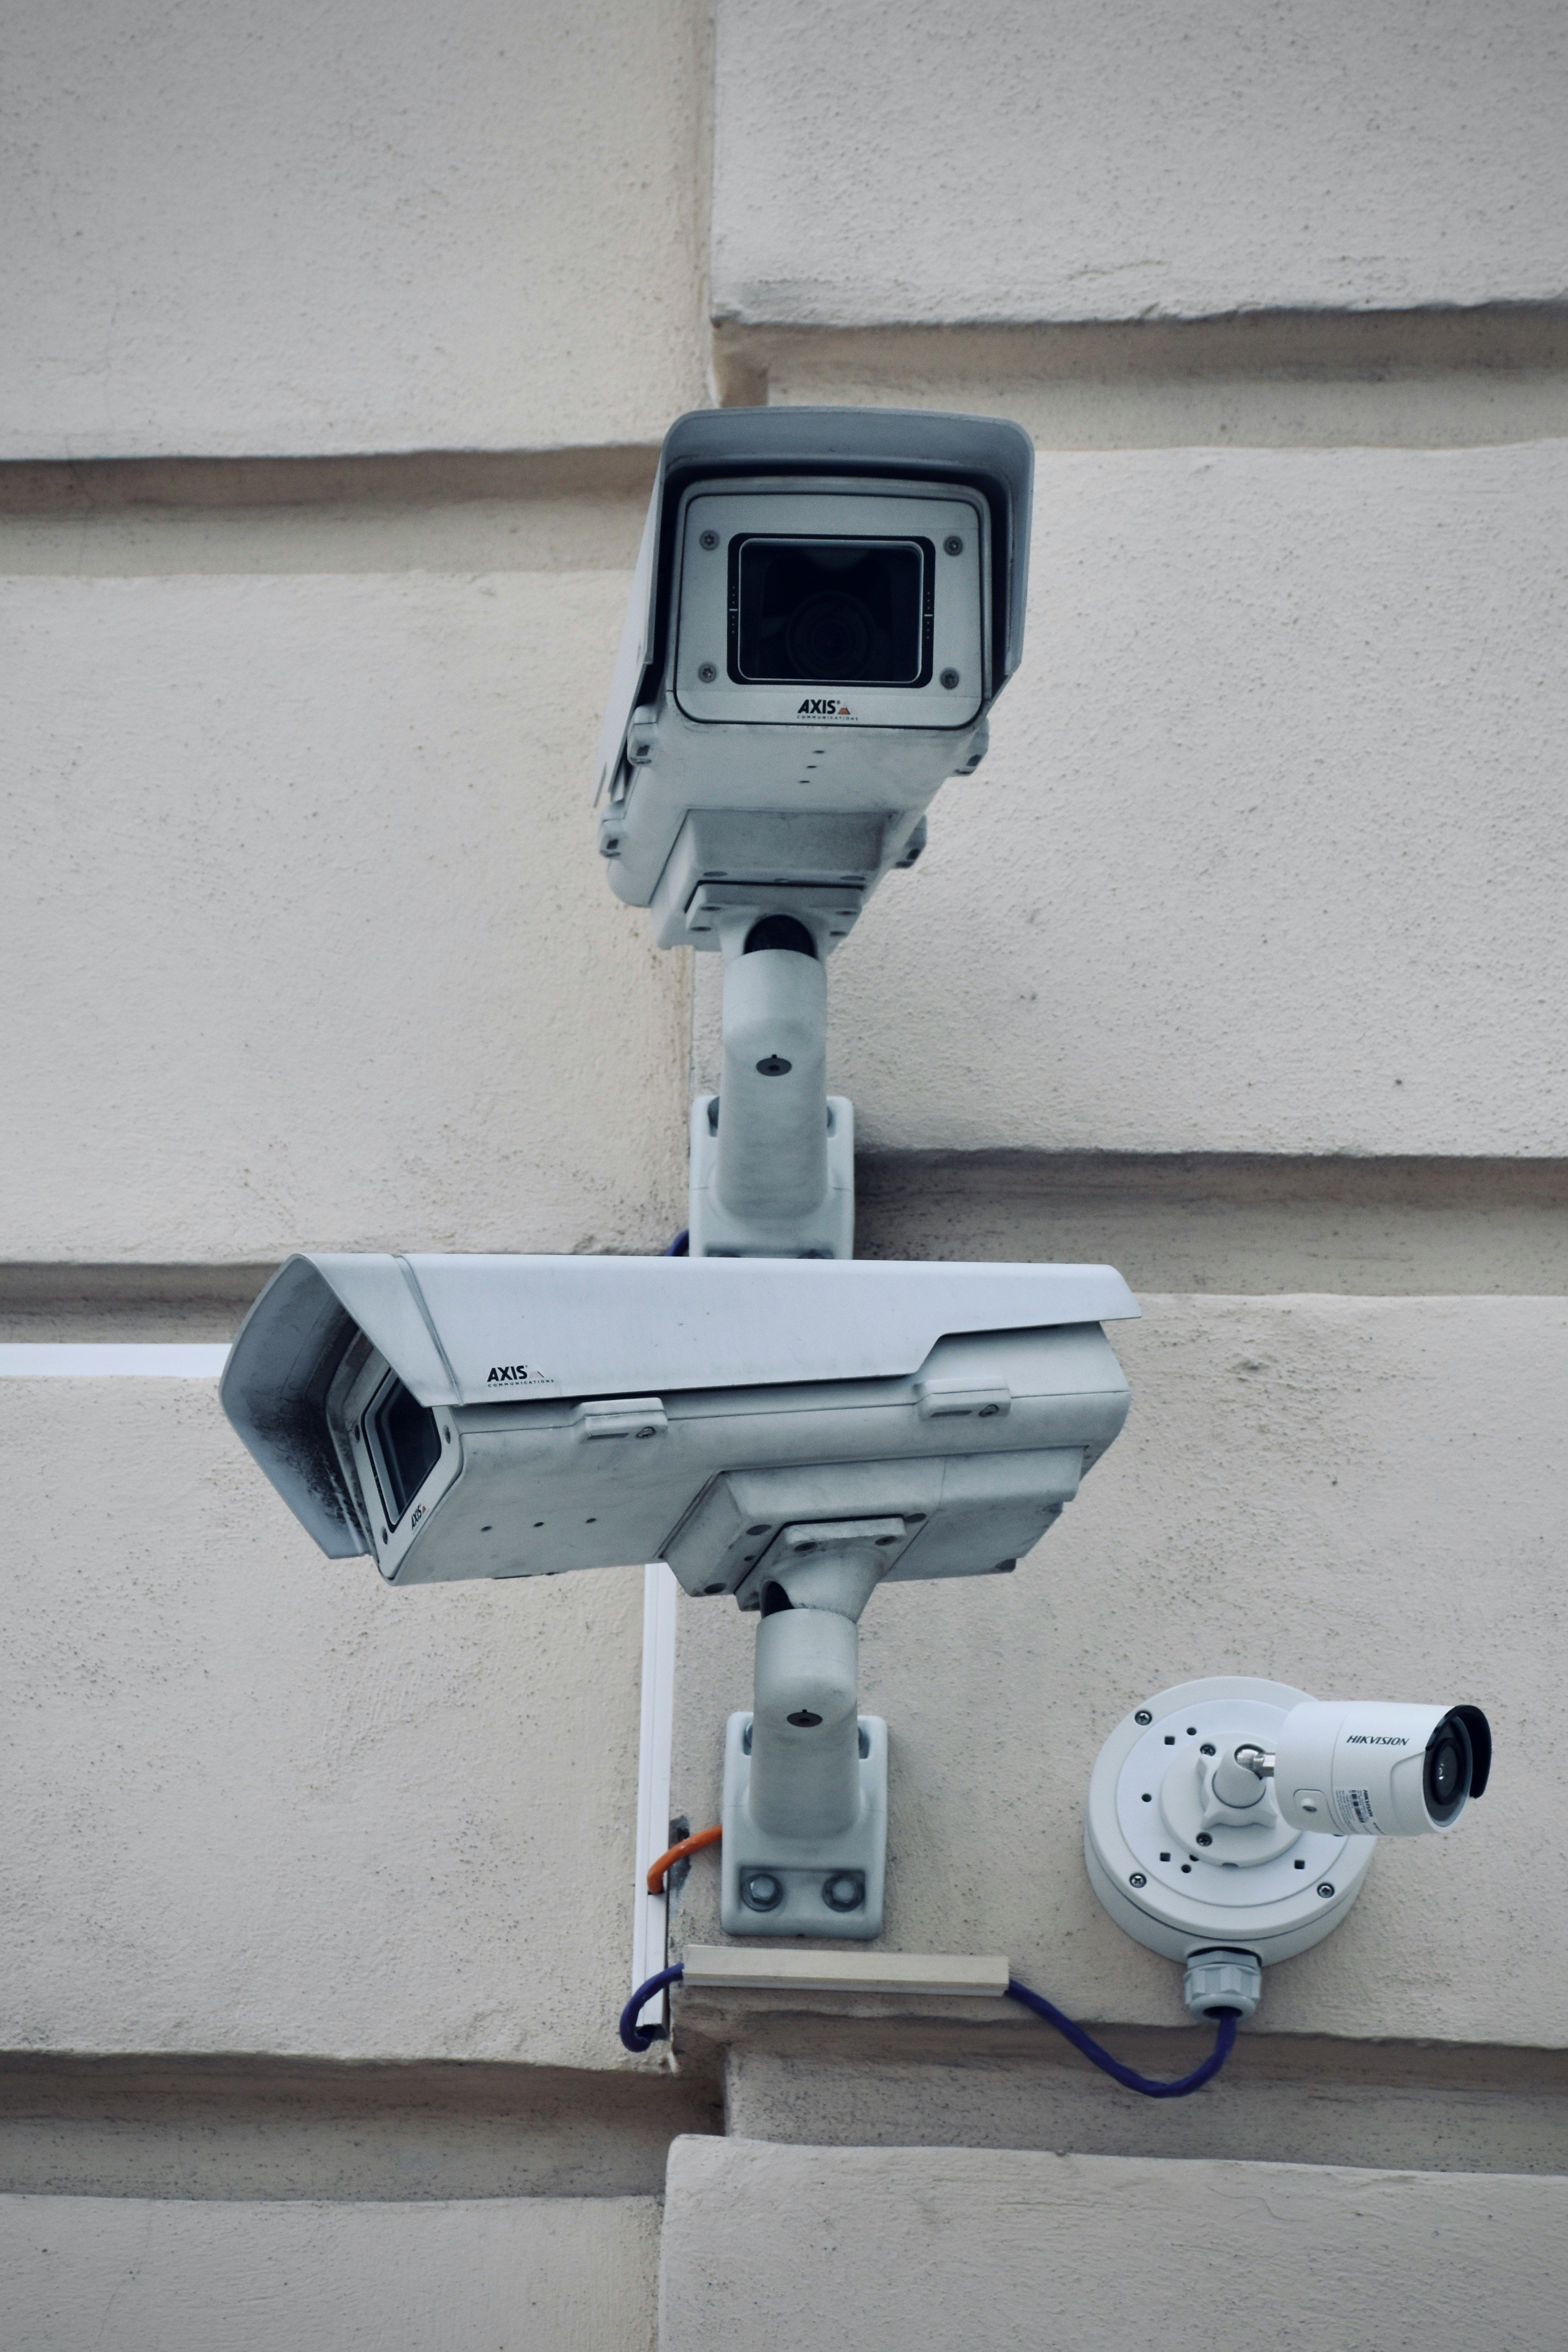 Surveillance CCTV for public safety